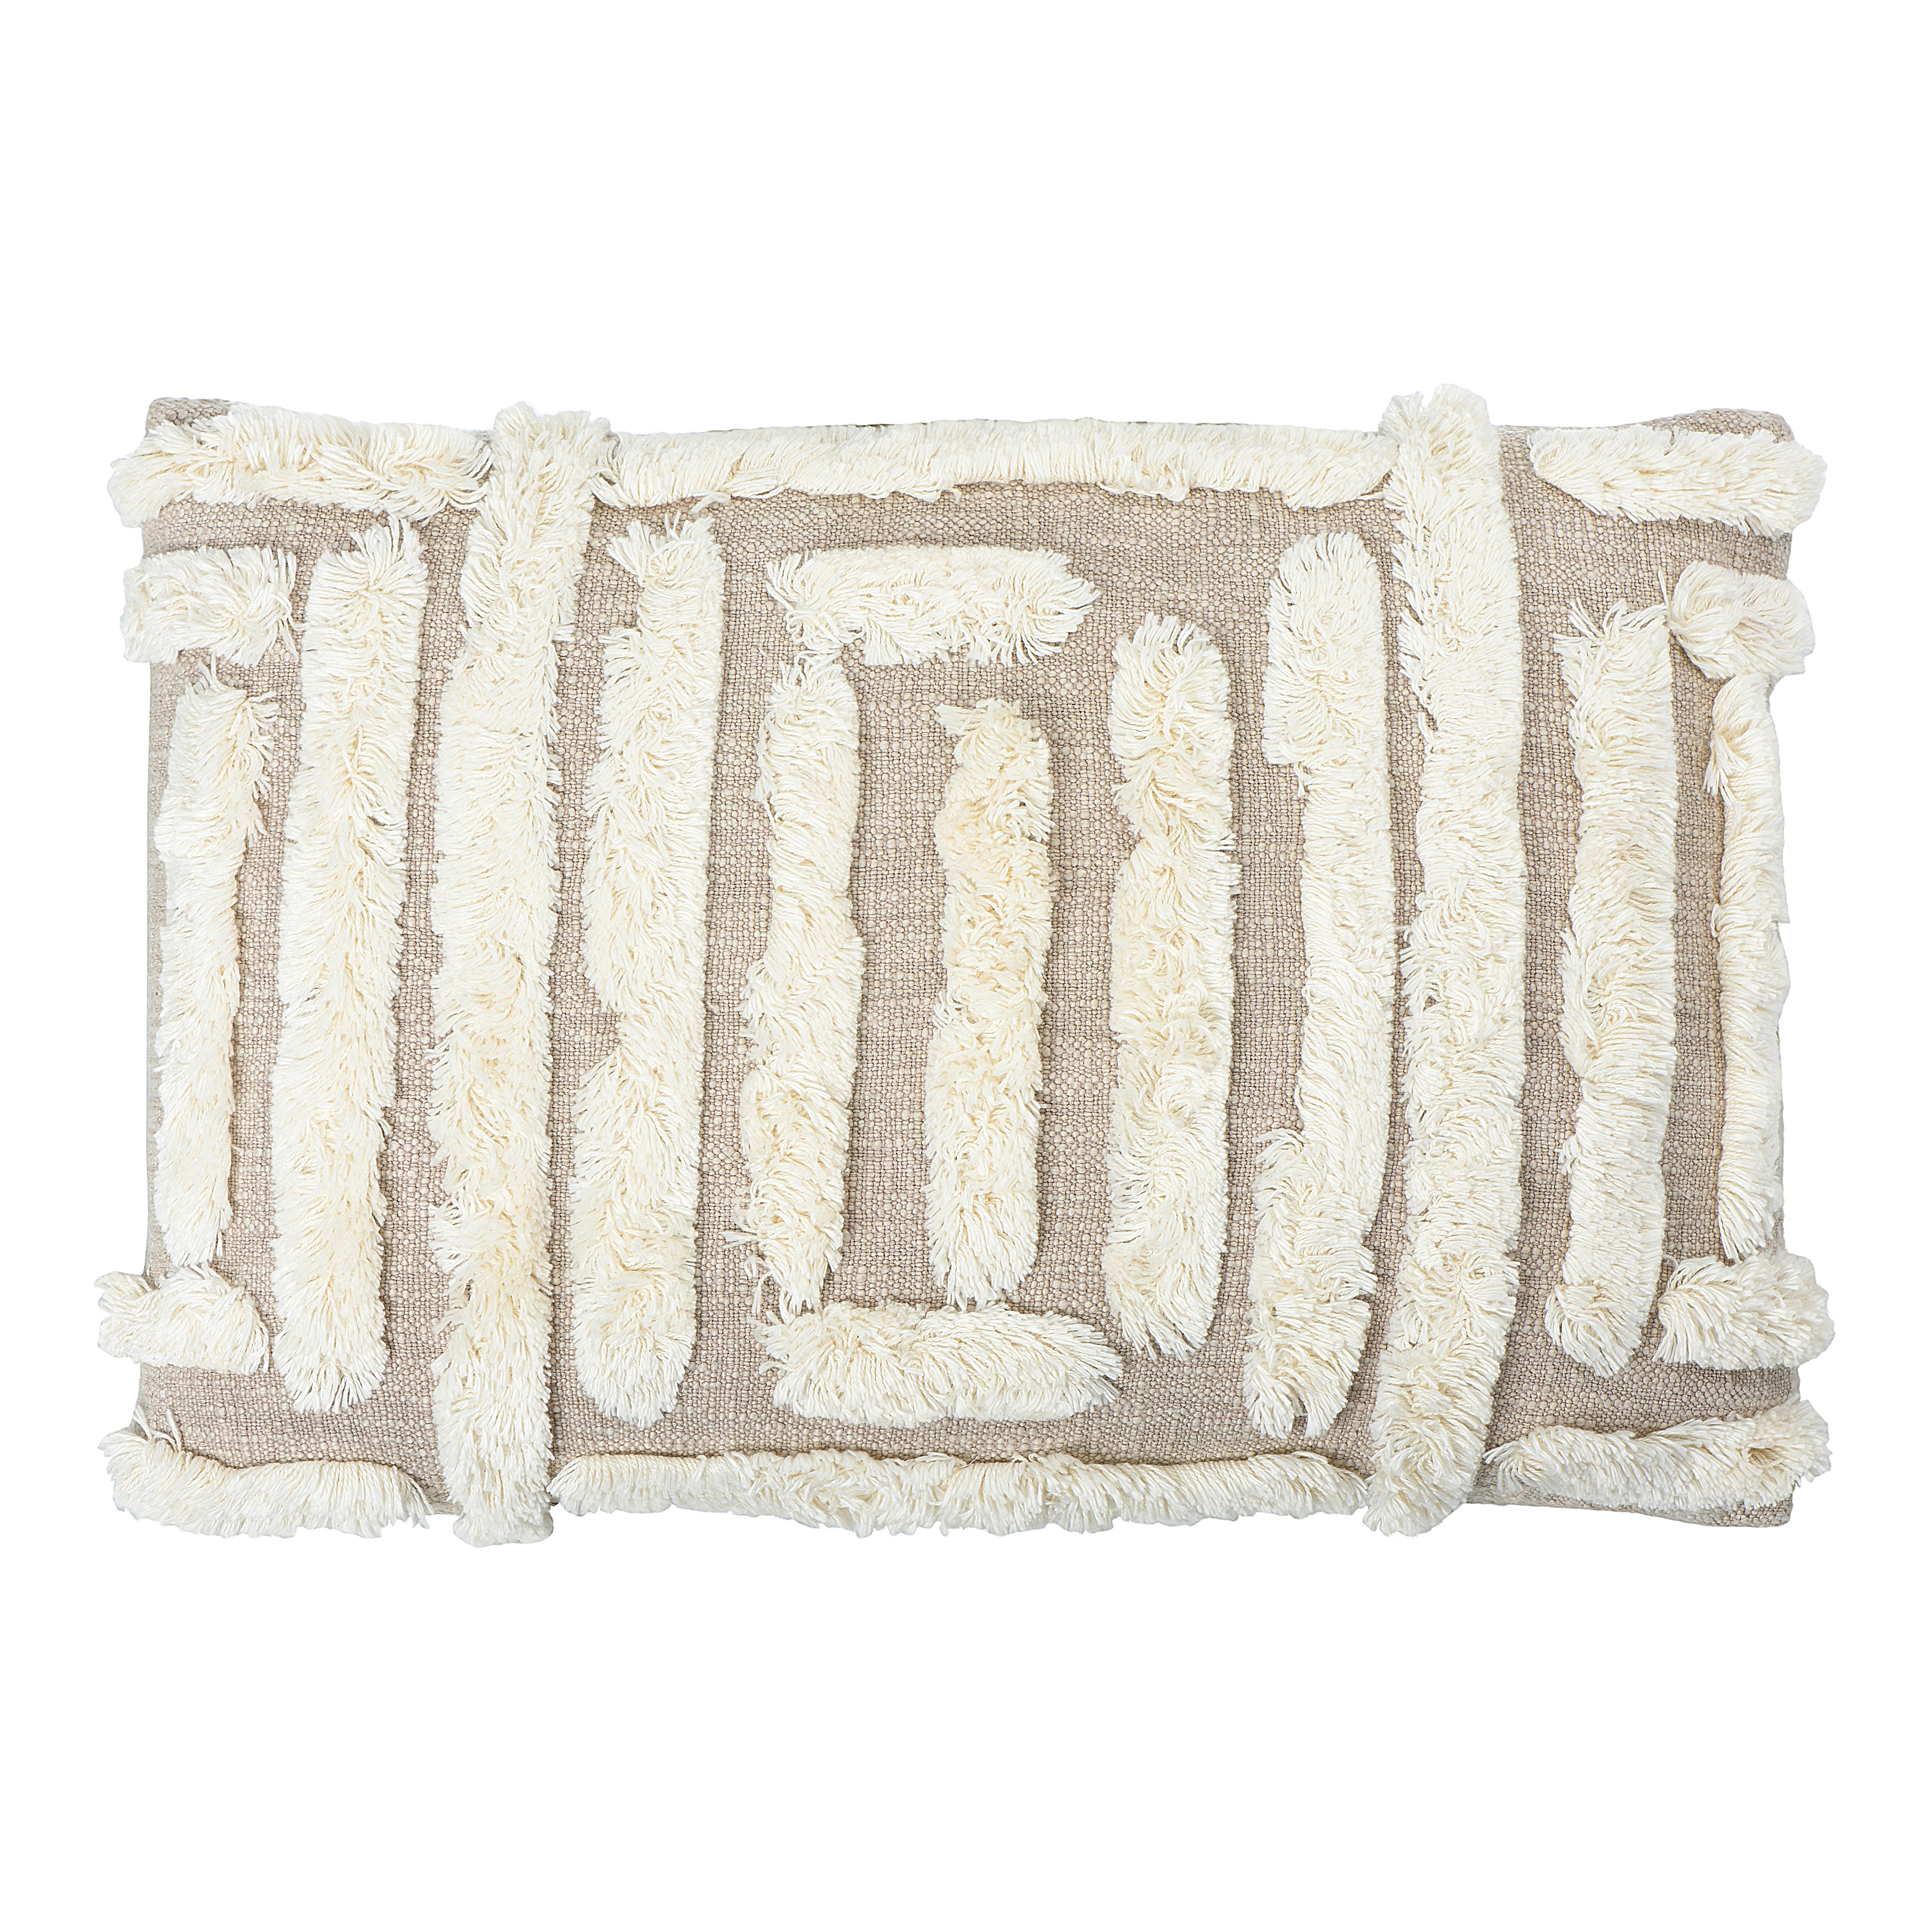 Lumbar Tan & Cream Tufted Woven Cotton Pillow - Image 0